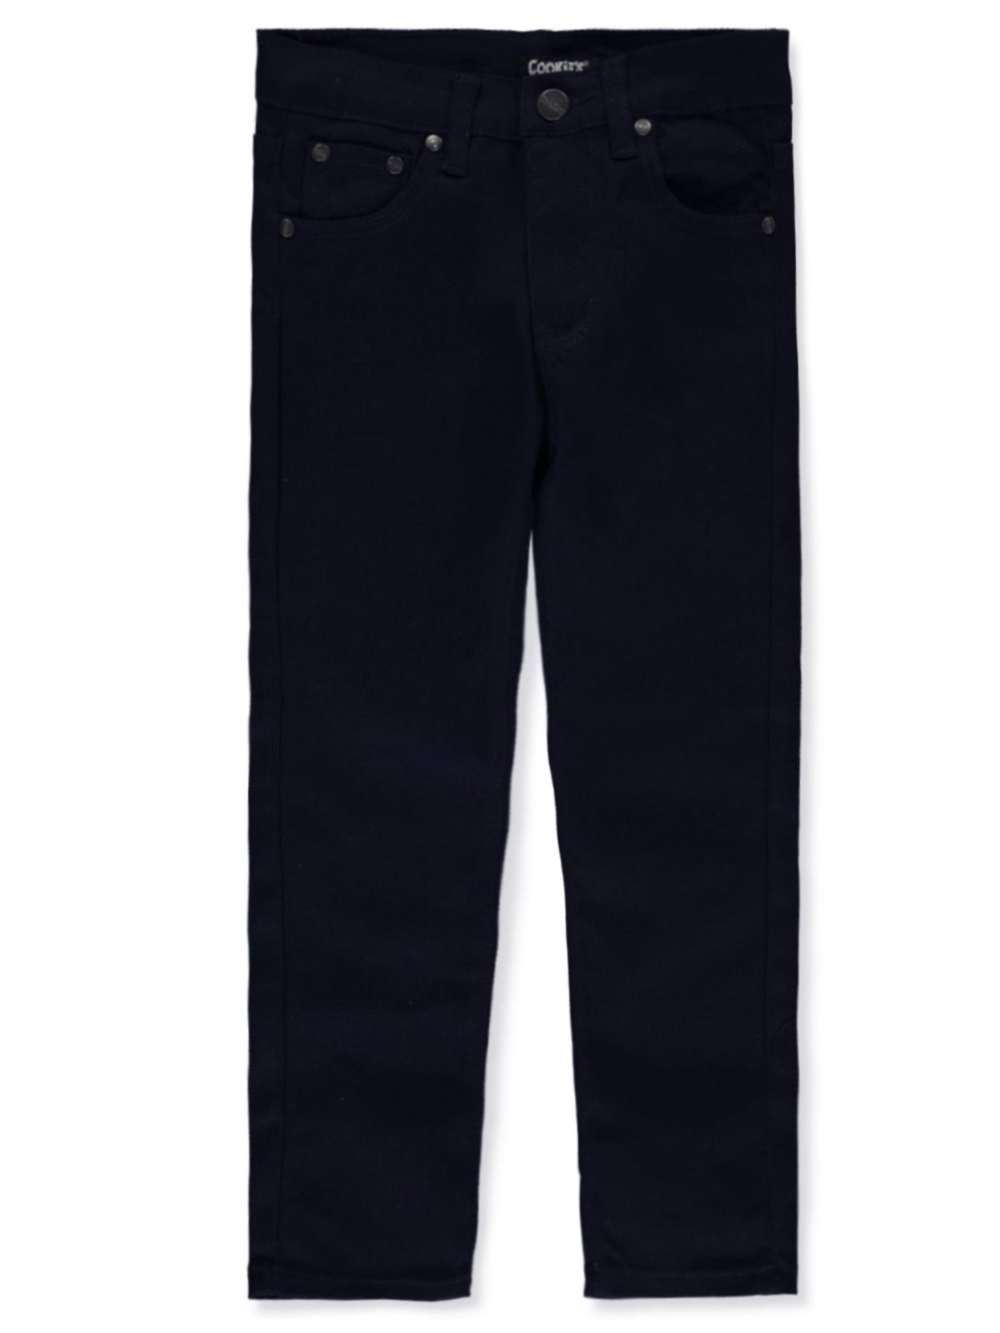 Maxxsel Boy's Skinny Jeans With Spandex (4T-7T & 8-16) - Maxxsel Apparel Inc